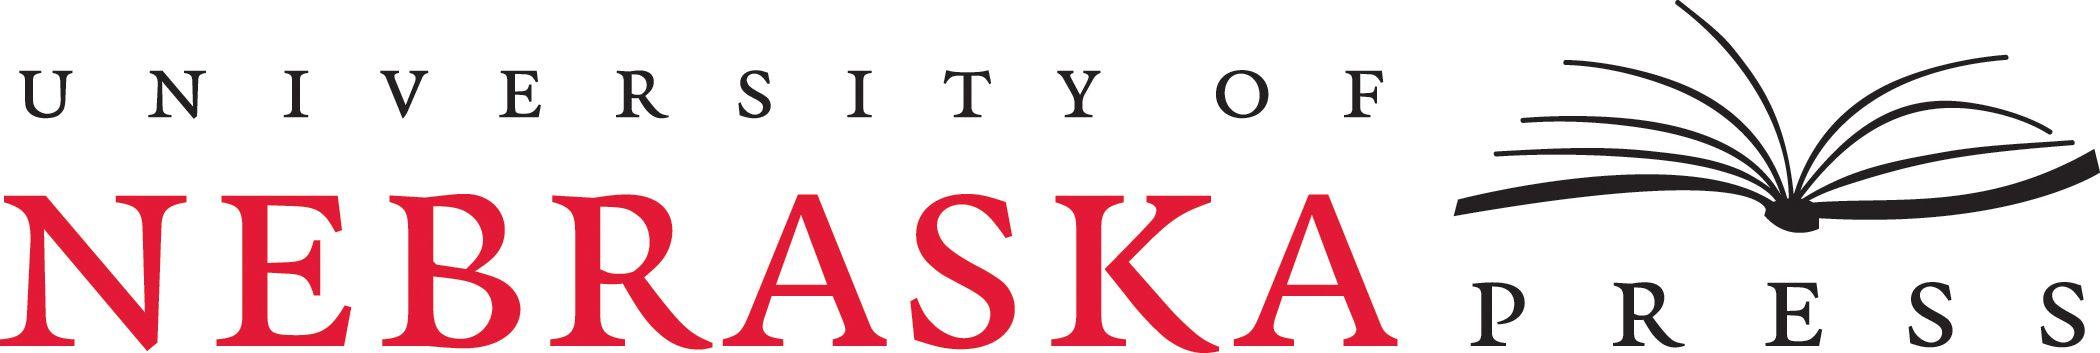 University of Nebraska Logo - University of Nebraska Press Acquisitions. Department of English